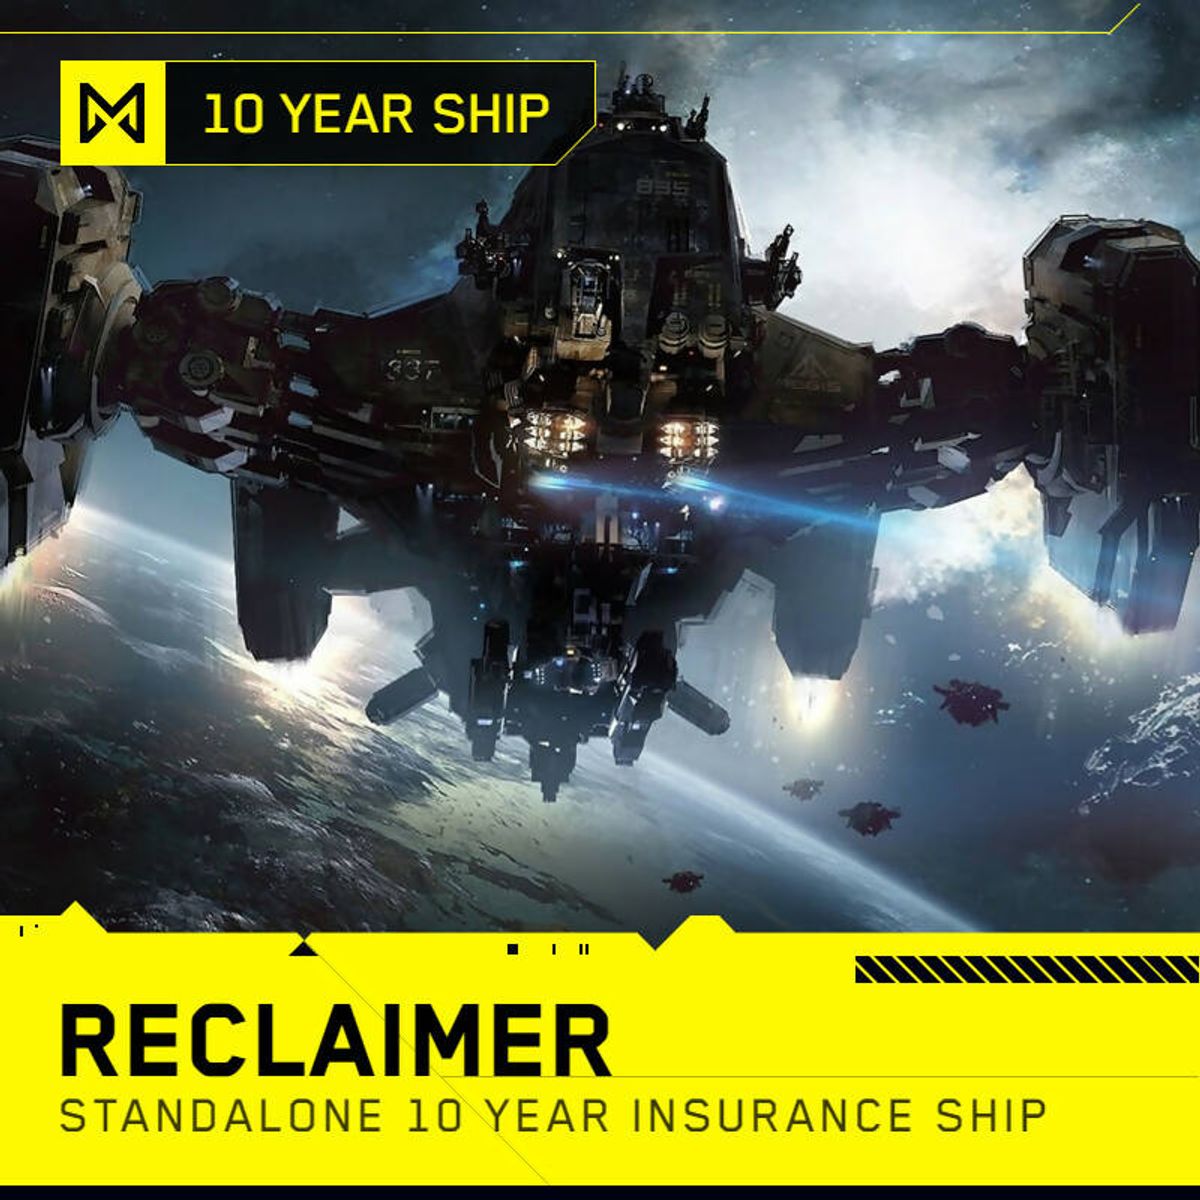 Reclaimer - 10 Year